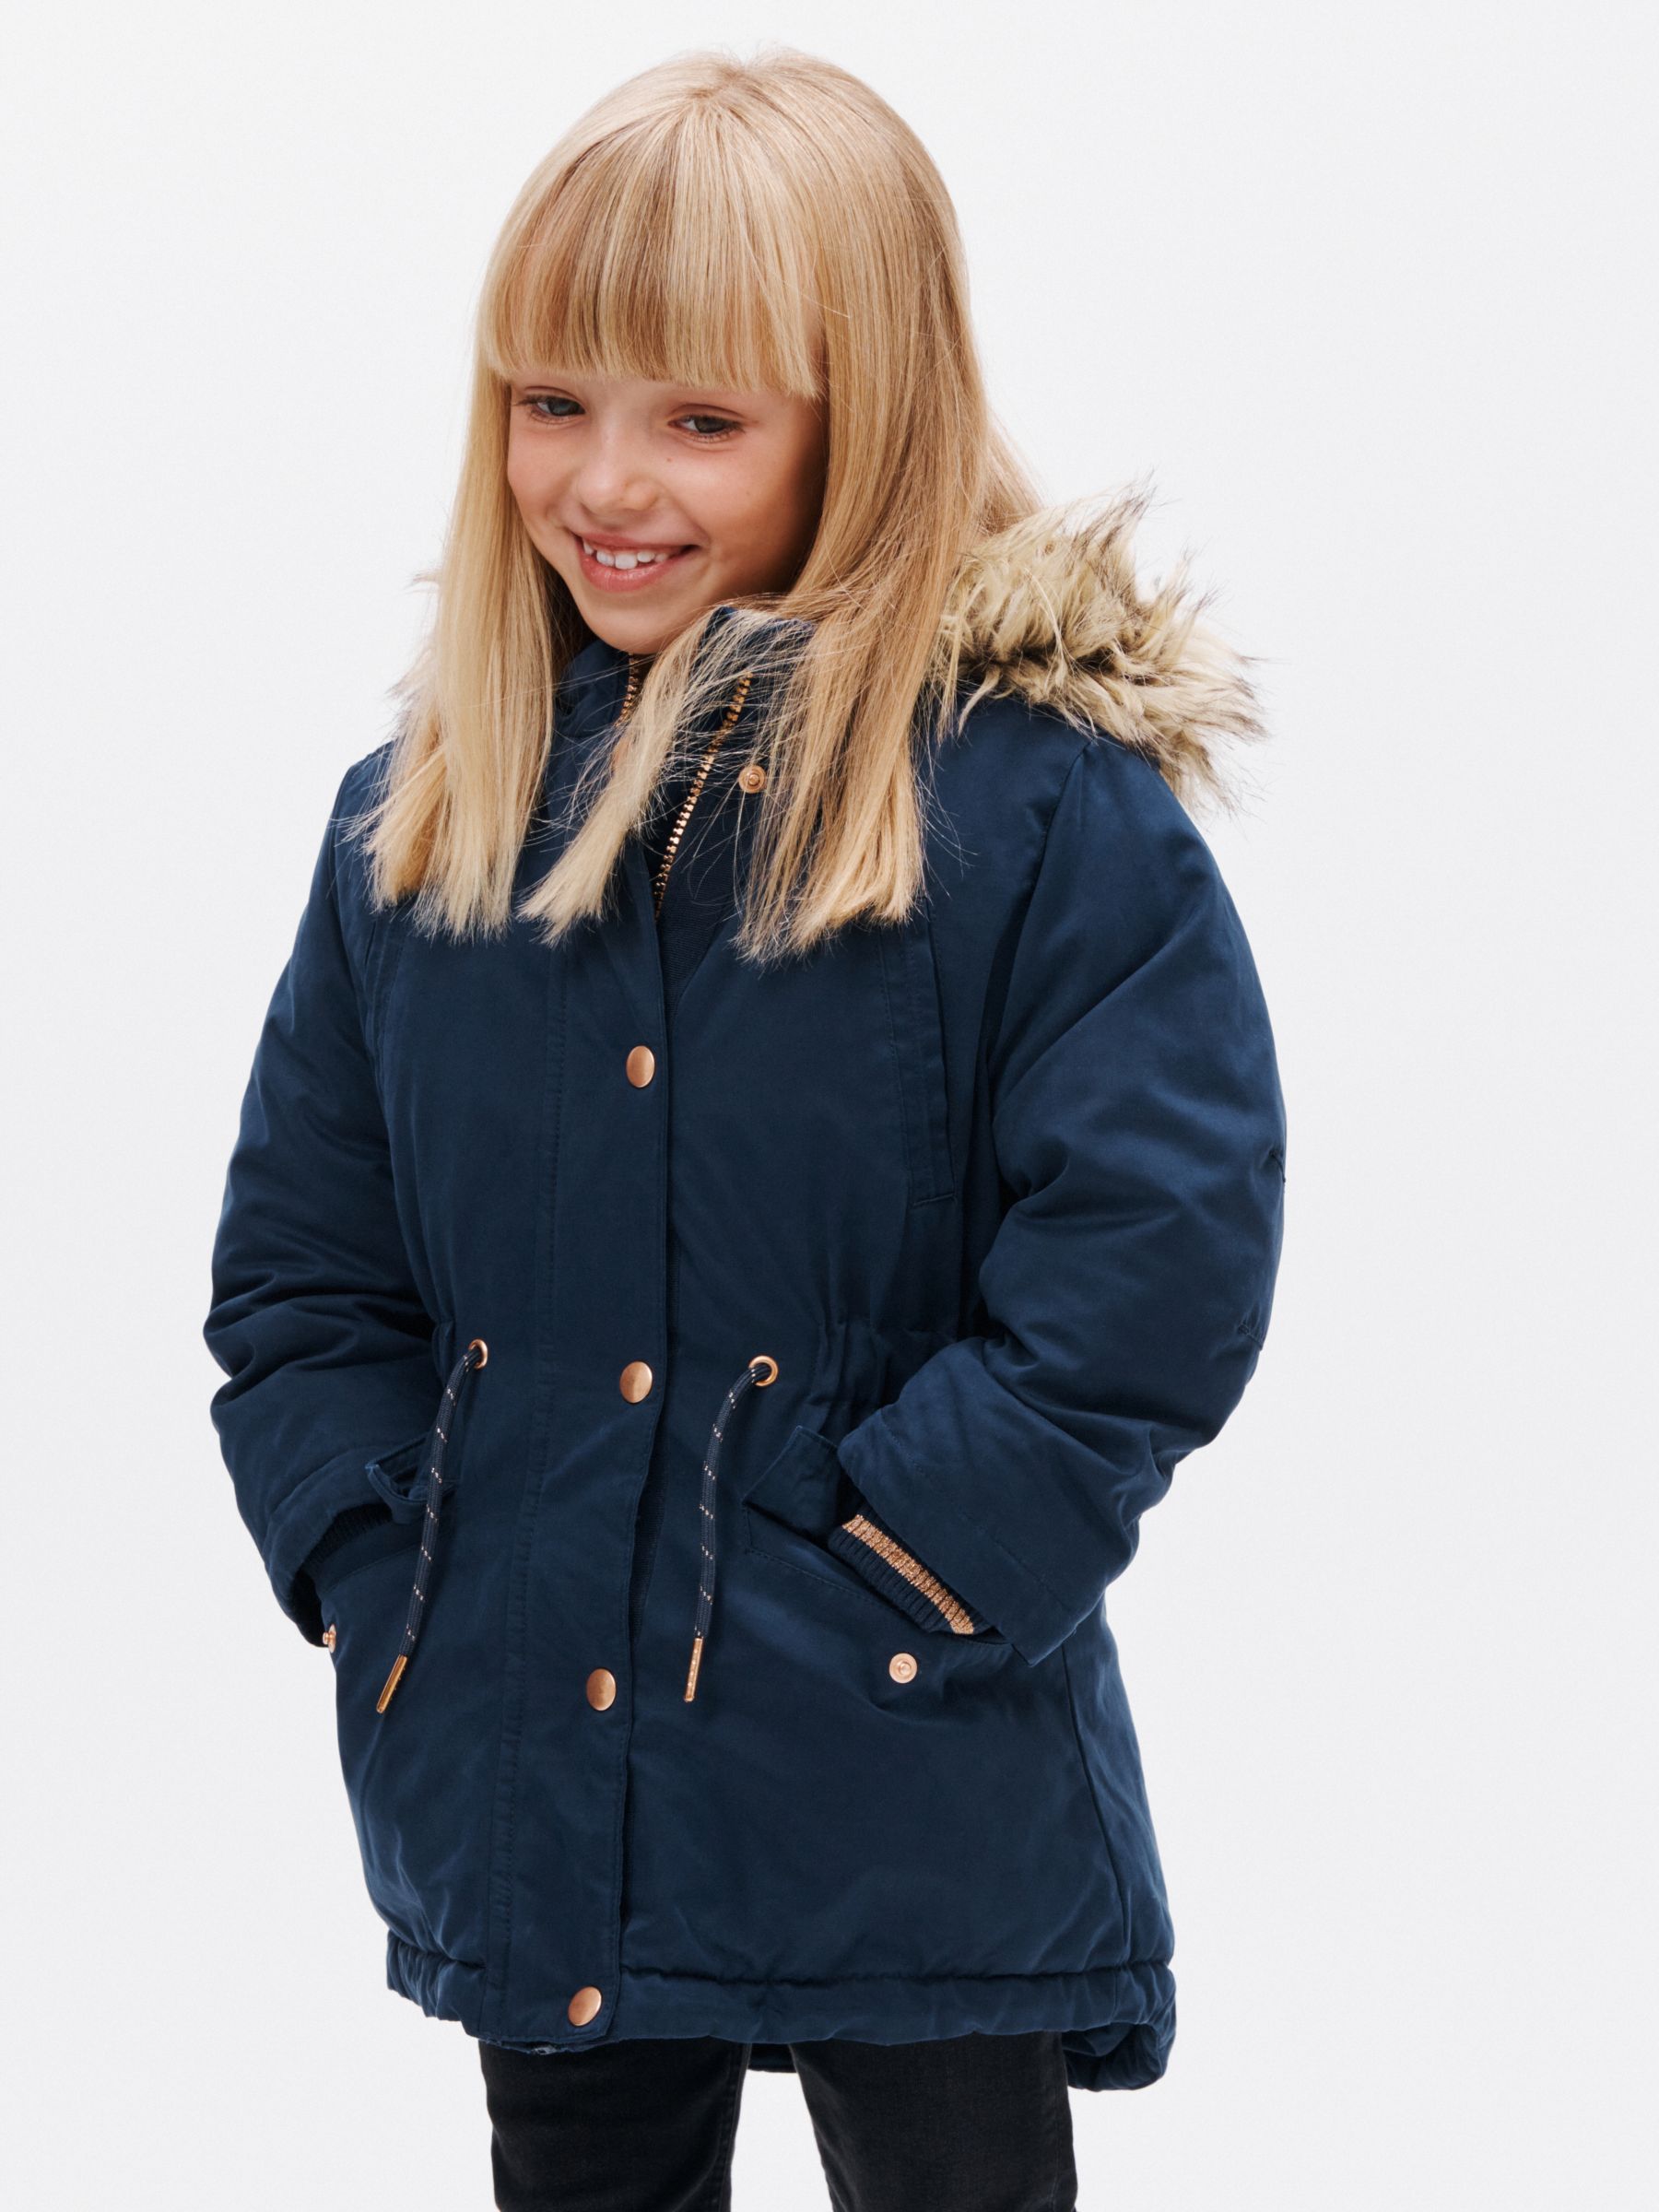 Girls John Lewis Navy Duffle Hooded Dress Coat Kids Jacket Age 2 to 12 Years New 